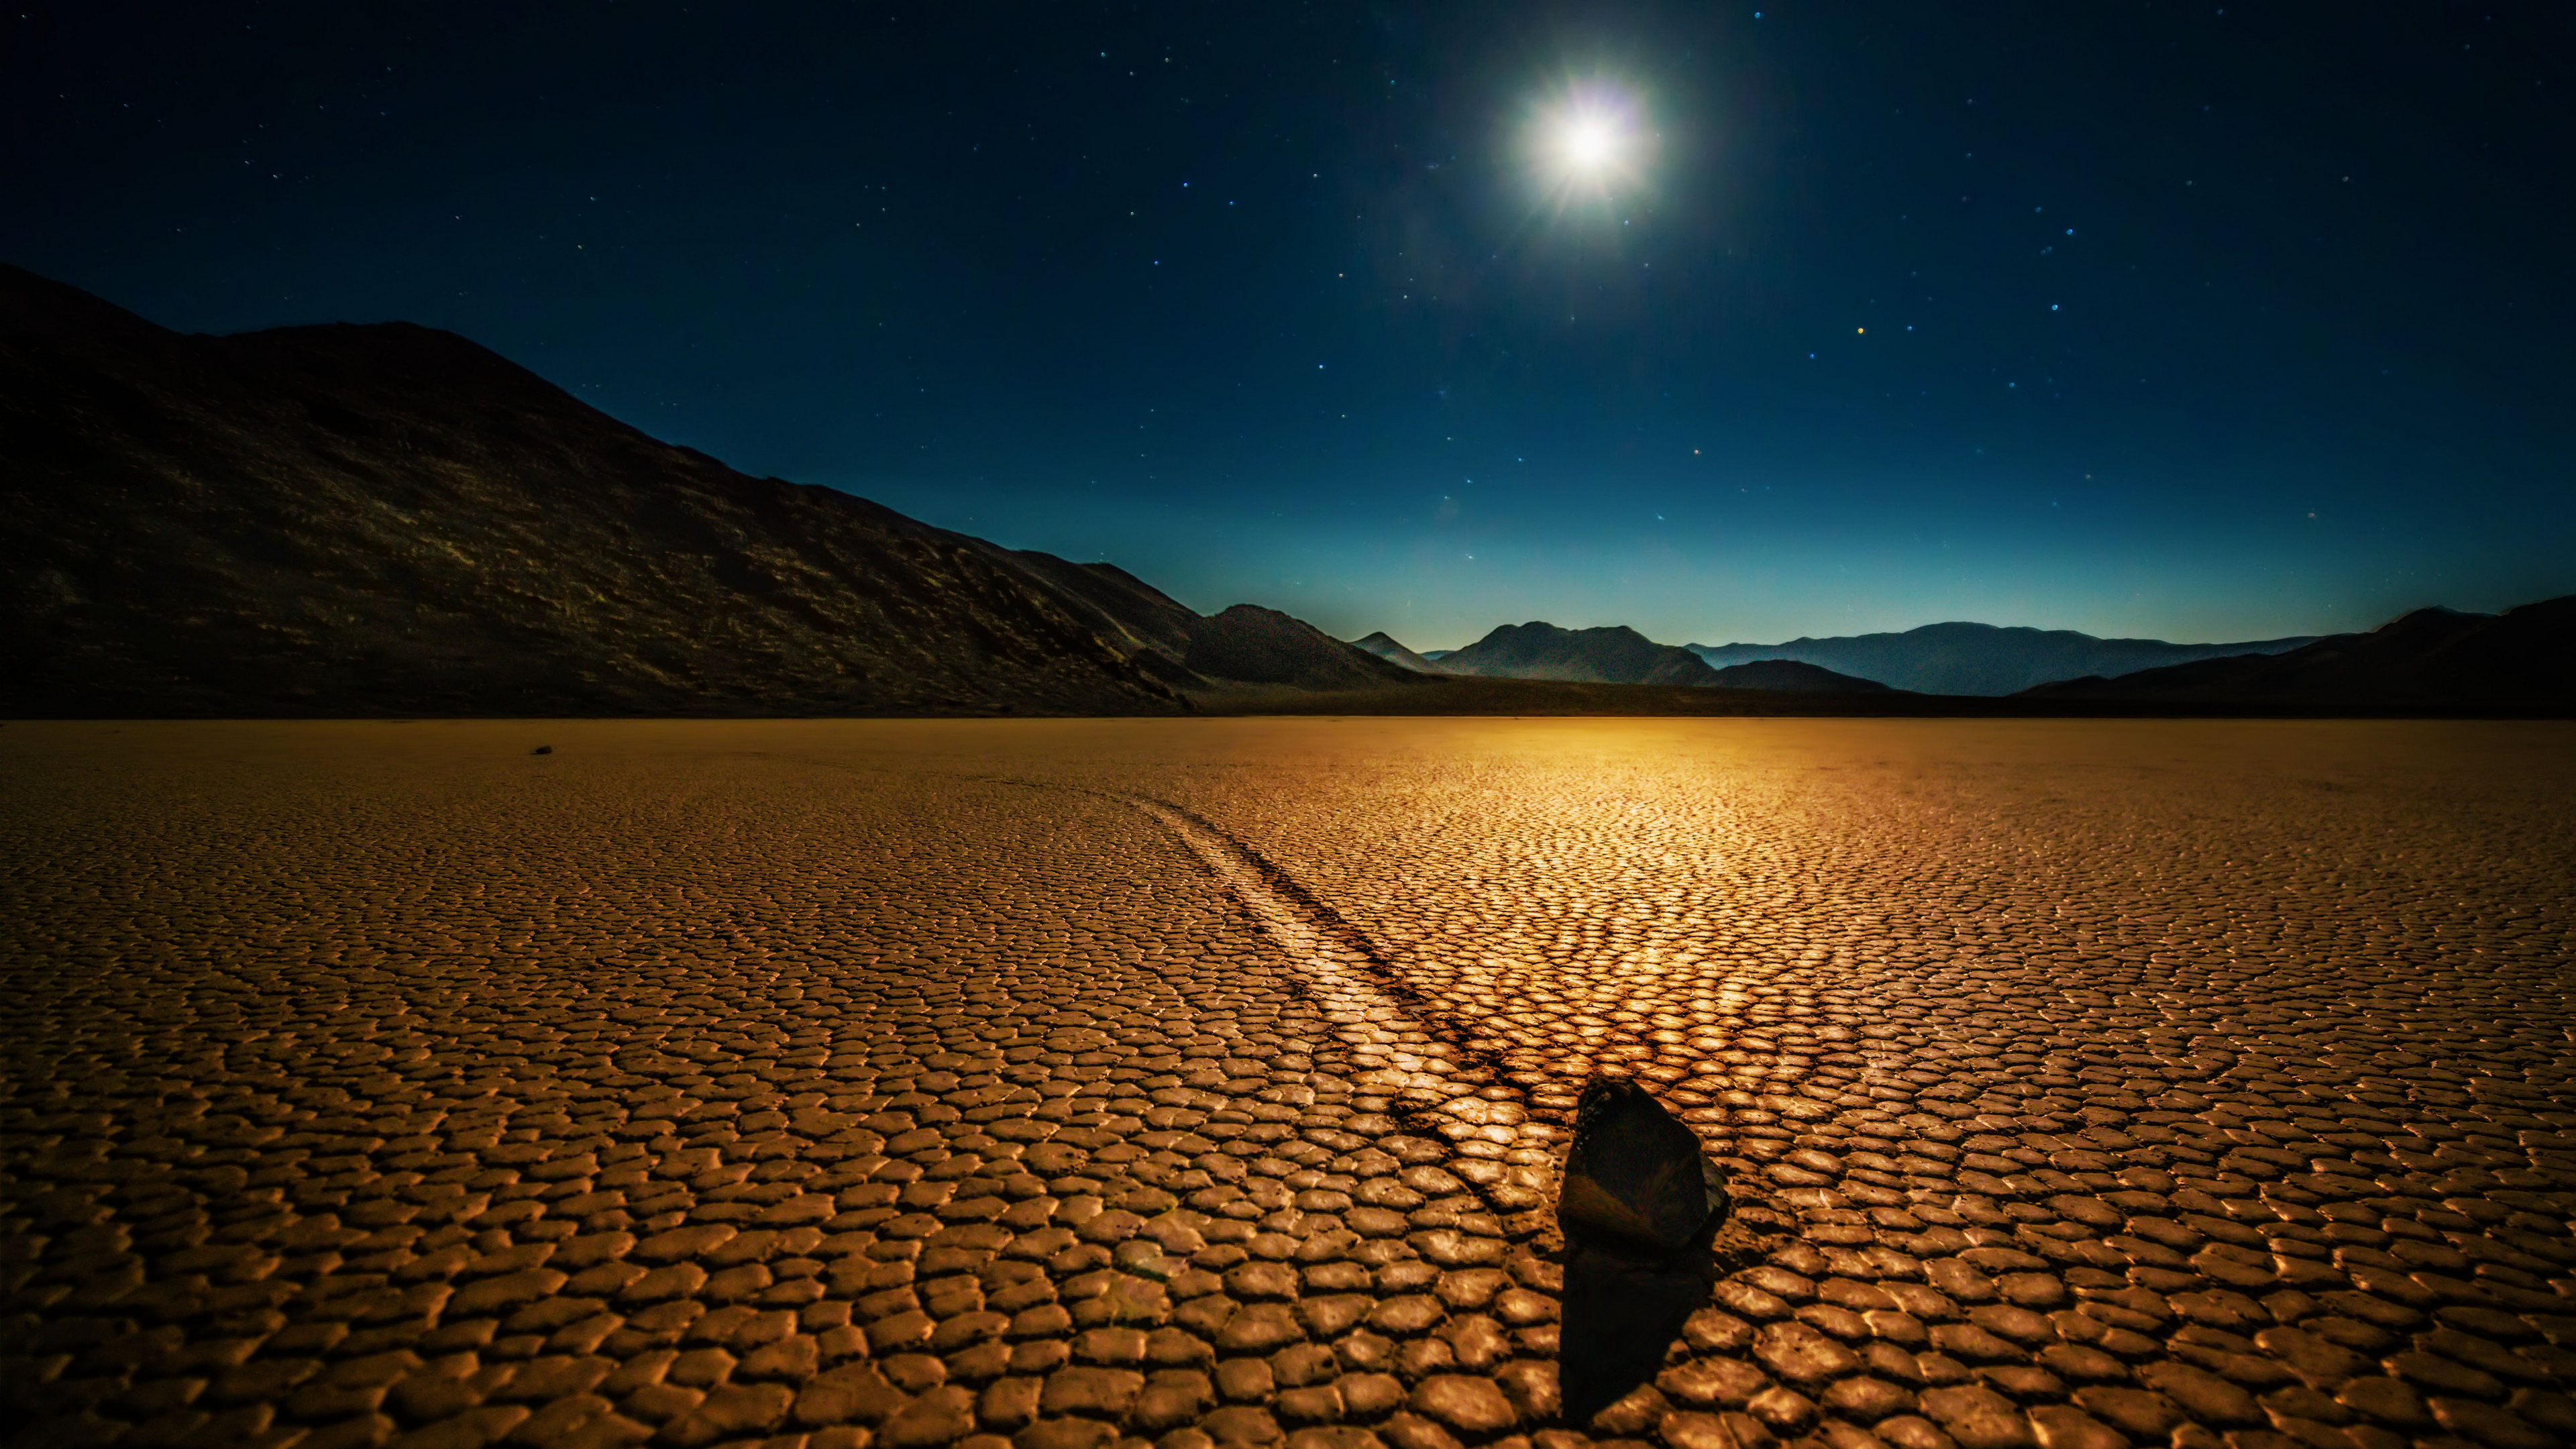 General 3840x2160 landscape 4K desert Death Valley Mojave Desert night stars rocks mountains nature sky Moon hills Trey Ratcliff photography